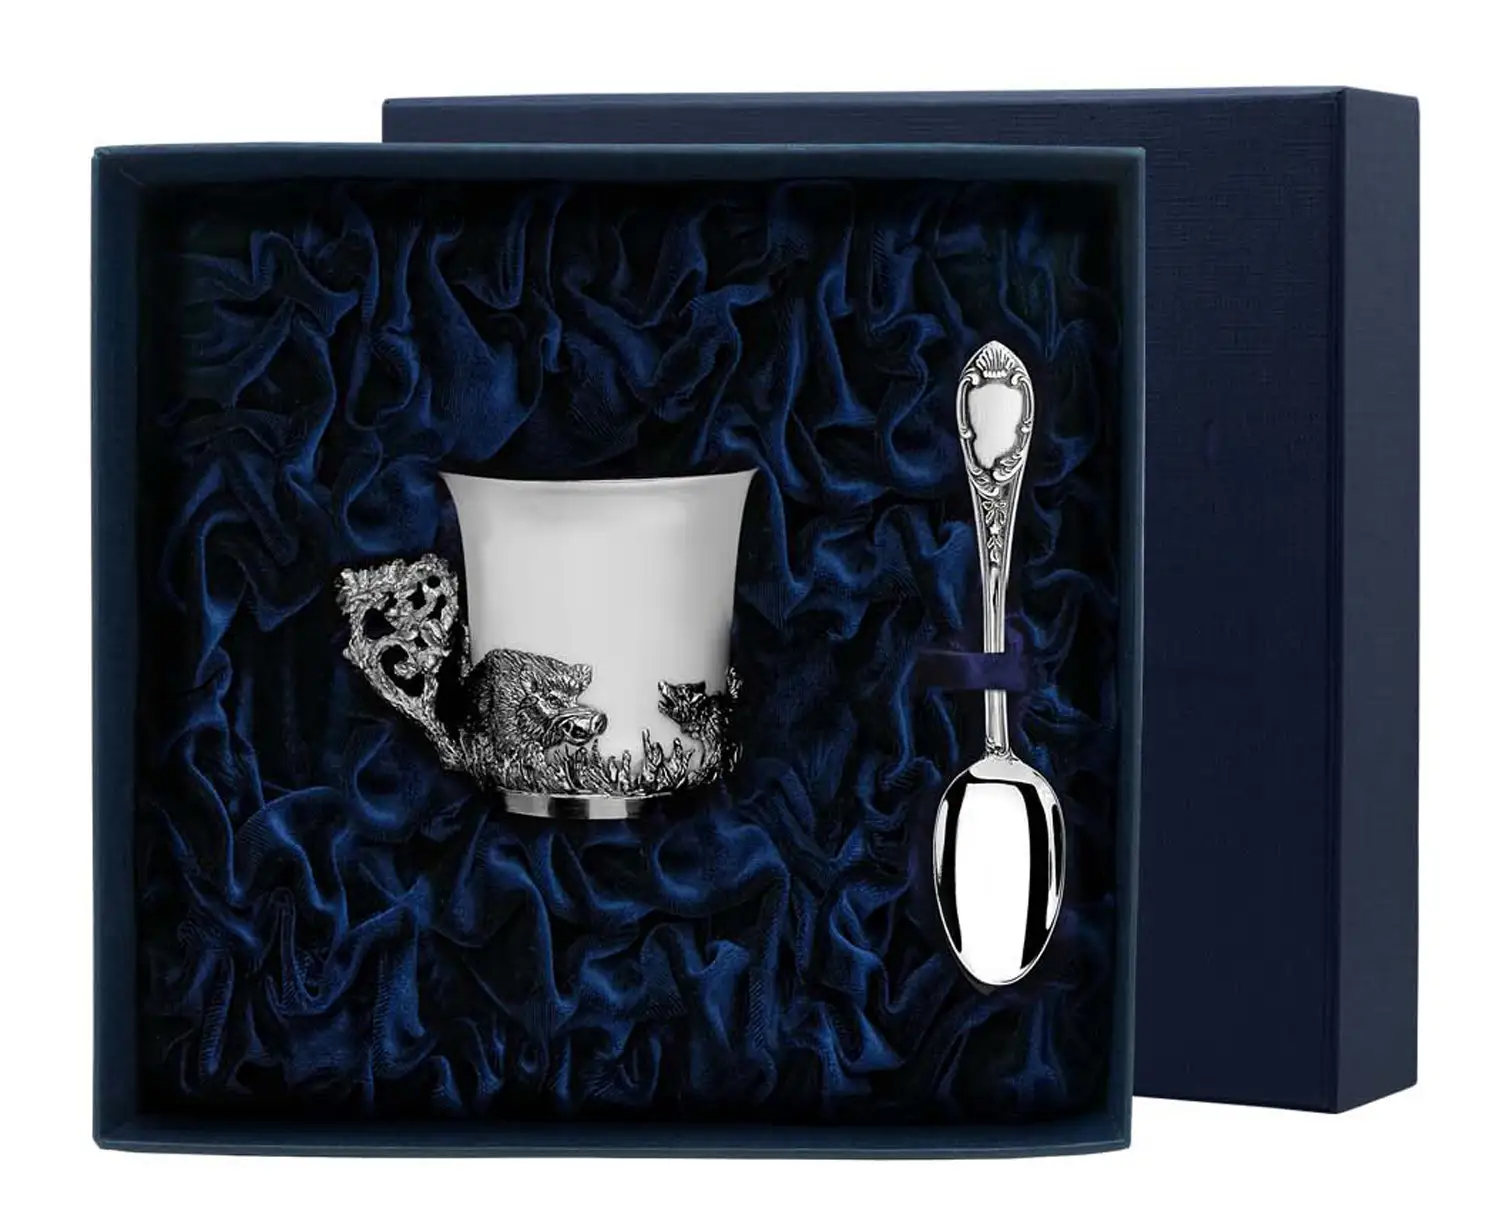 Набор кофейная чашка Кабан: ложка, чашка (Серебро 925) набор симфония чашка ложка чайник серебро 925